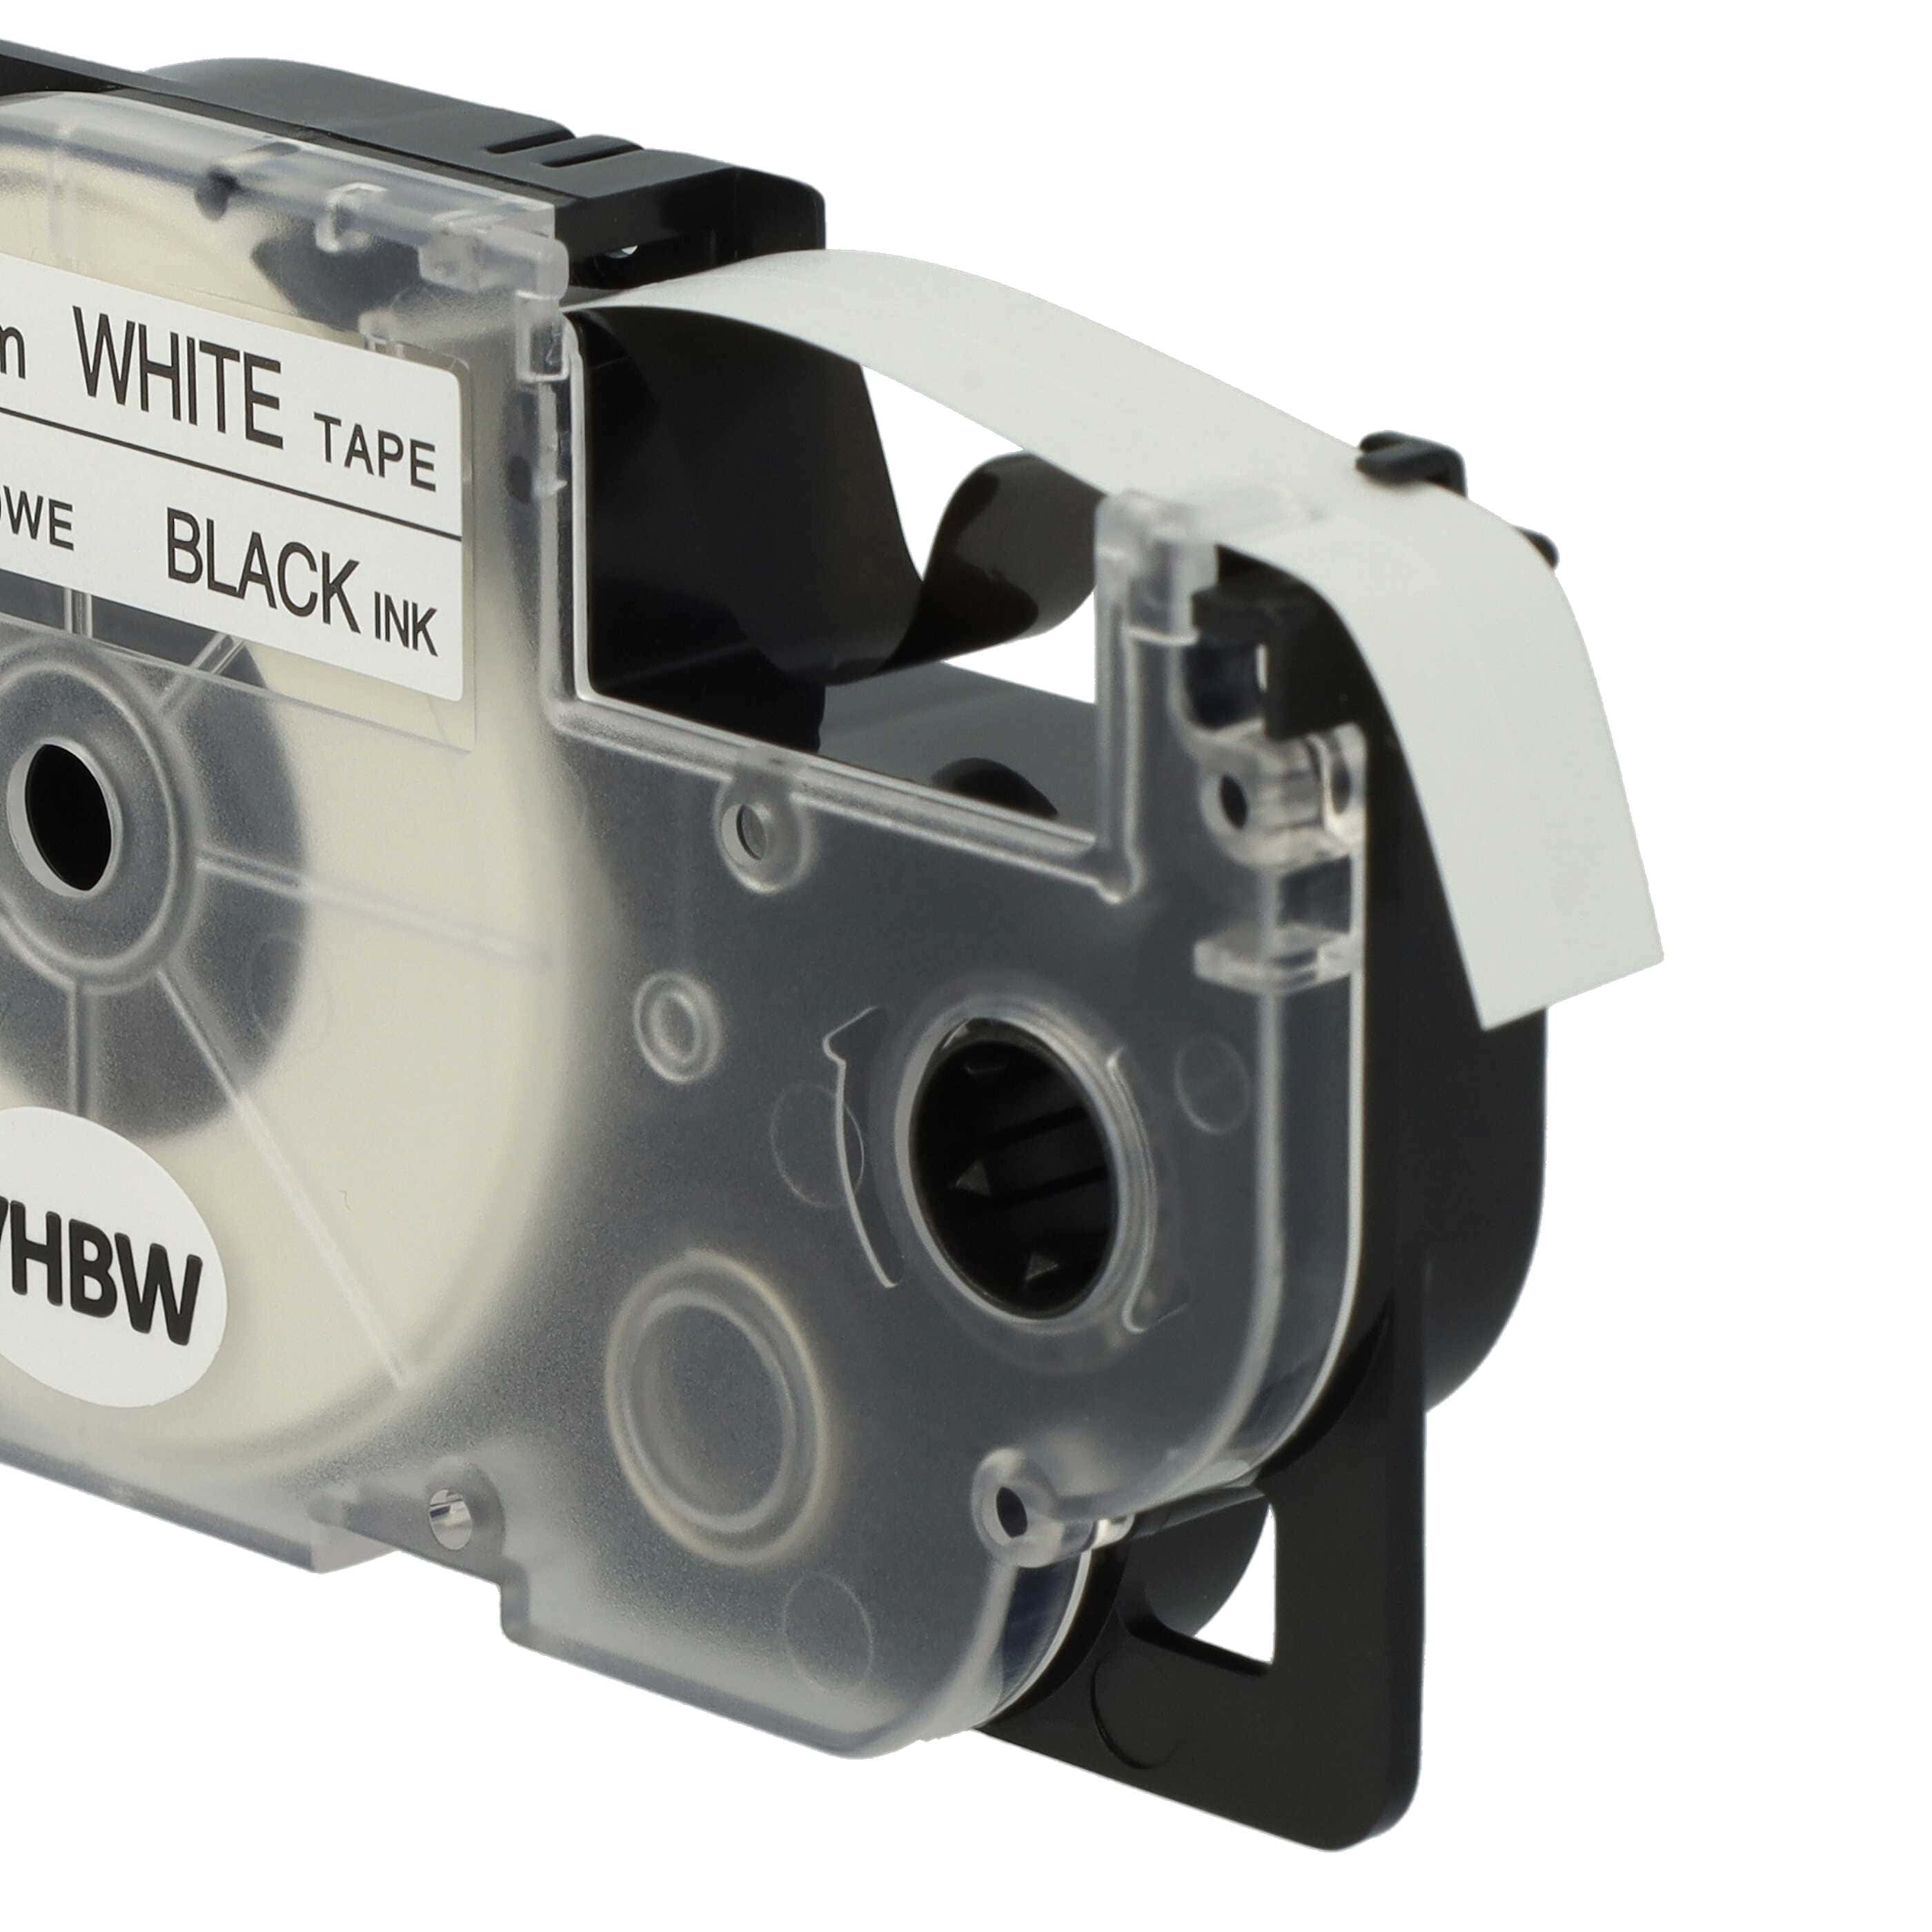 3x Cassetta nastro sostituisce Casio XR-9WE1, XR-9WE per etichettatrice Casio 9mm nero su bianco